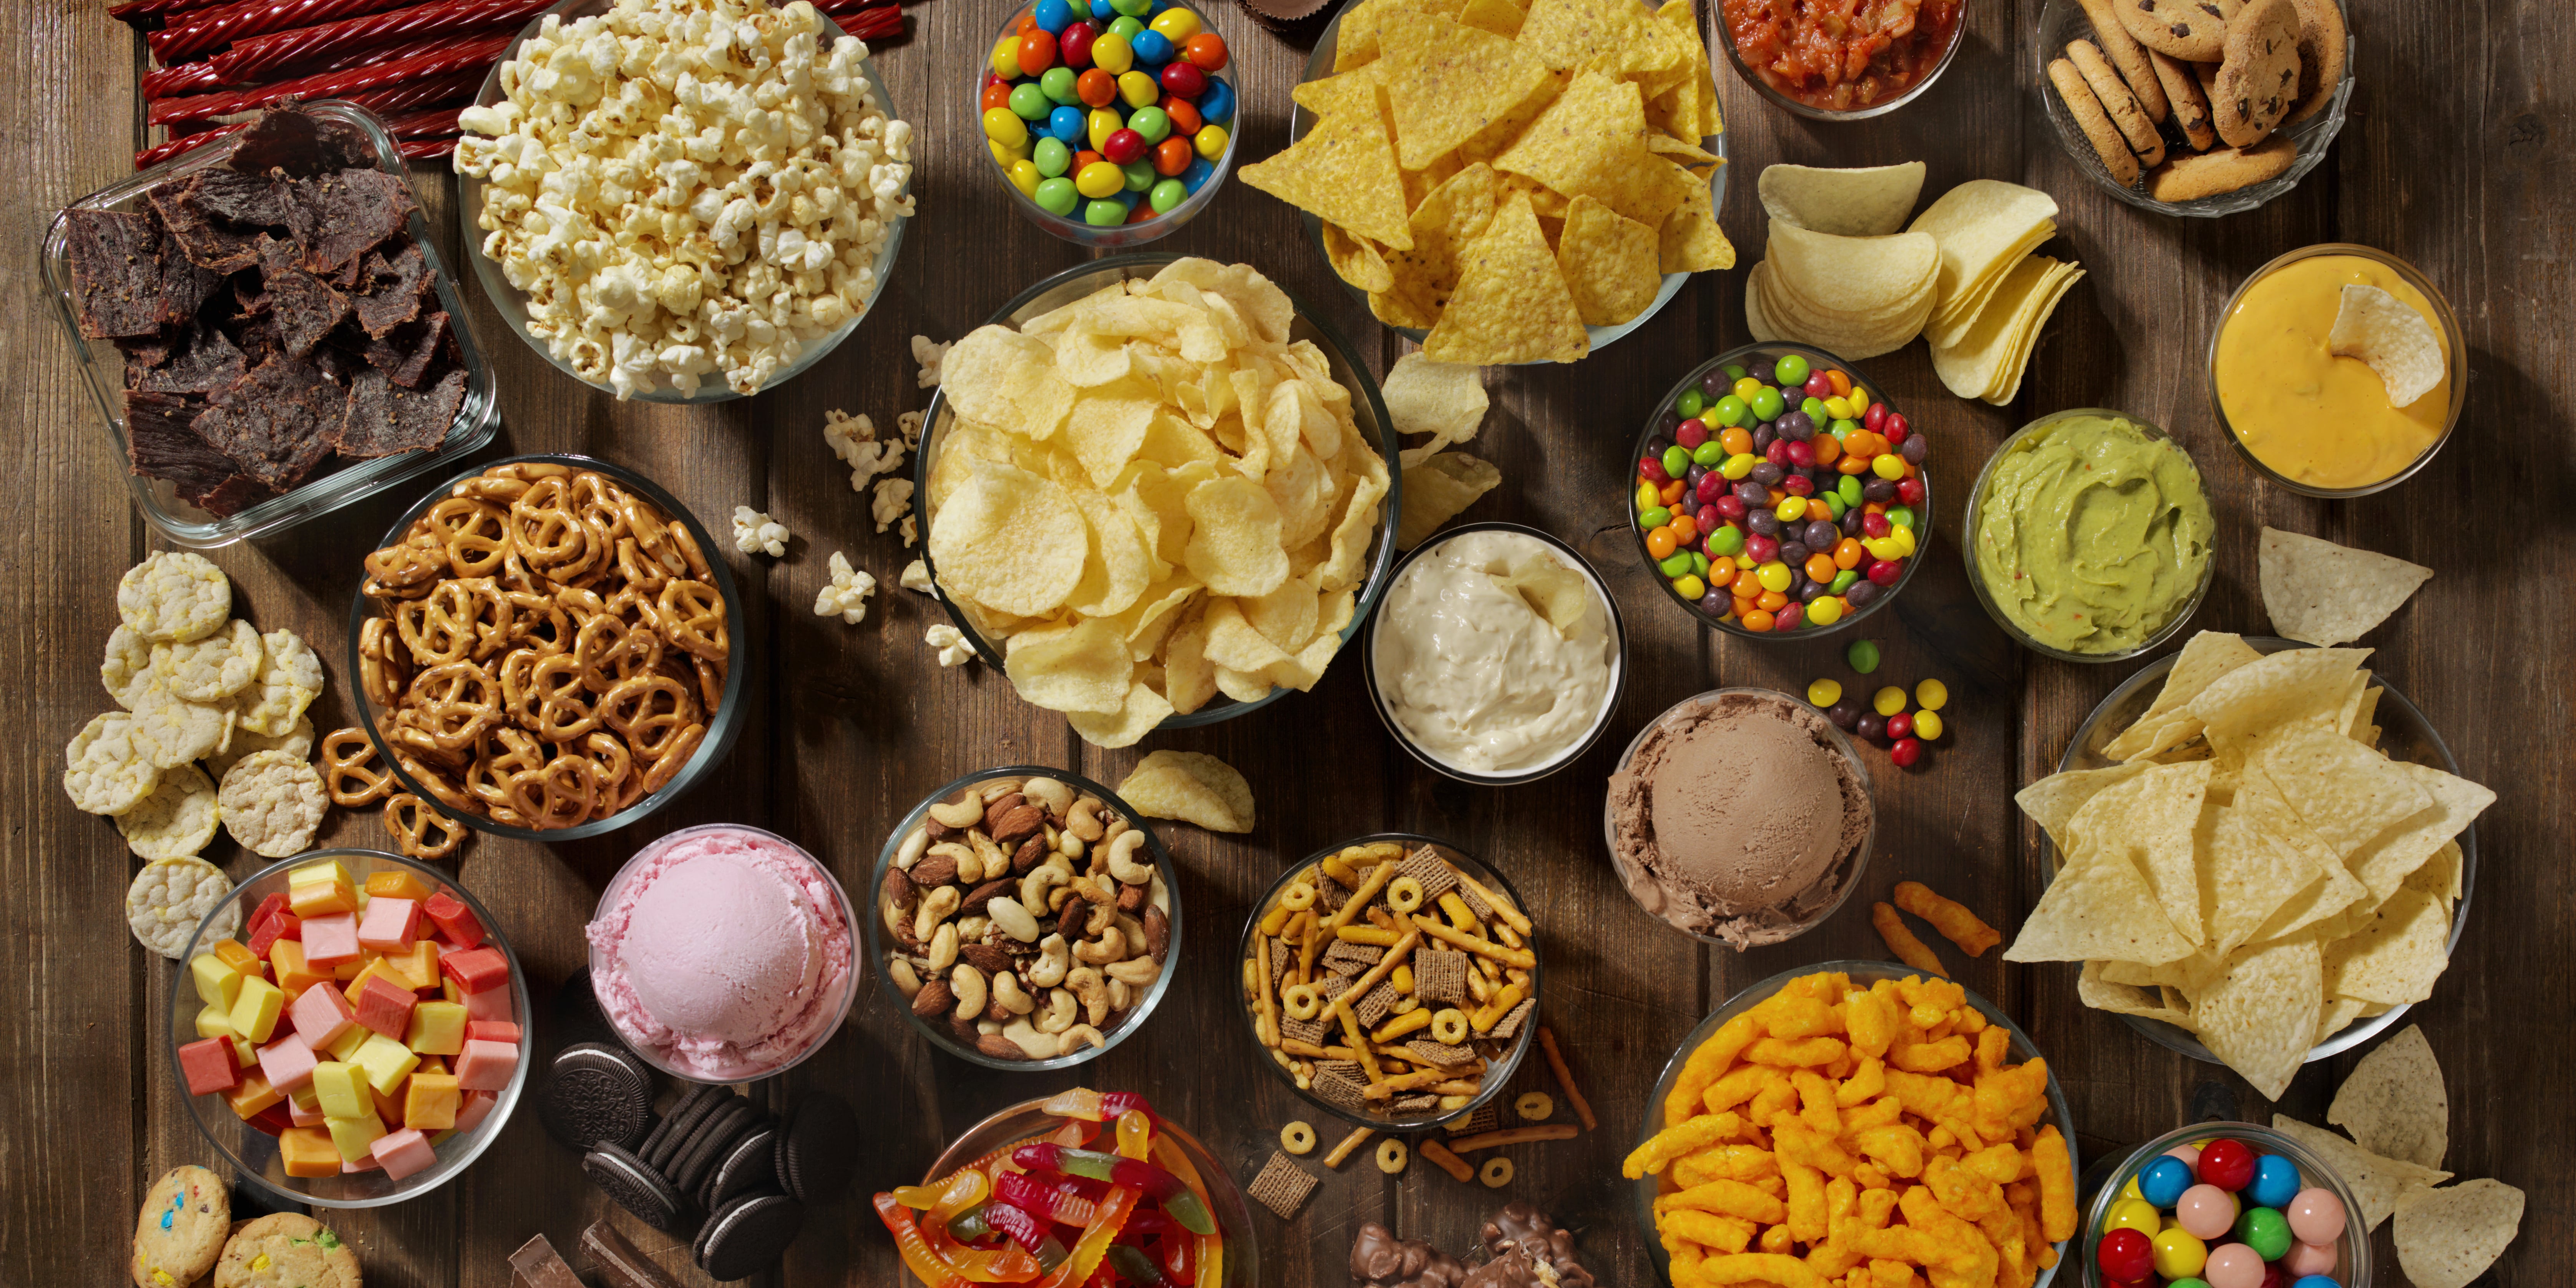 23 Cute Snack Ideas For Kids & Grown-Ups Alike